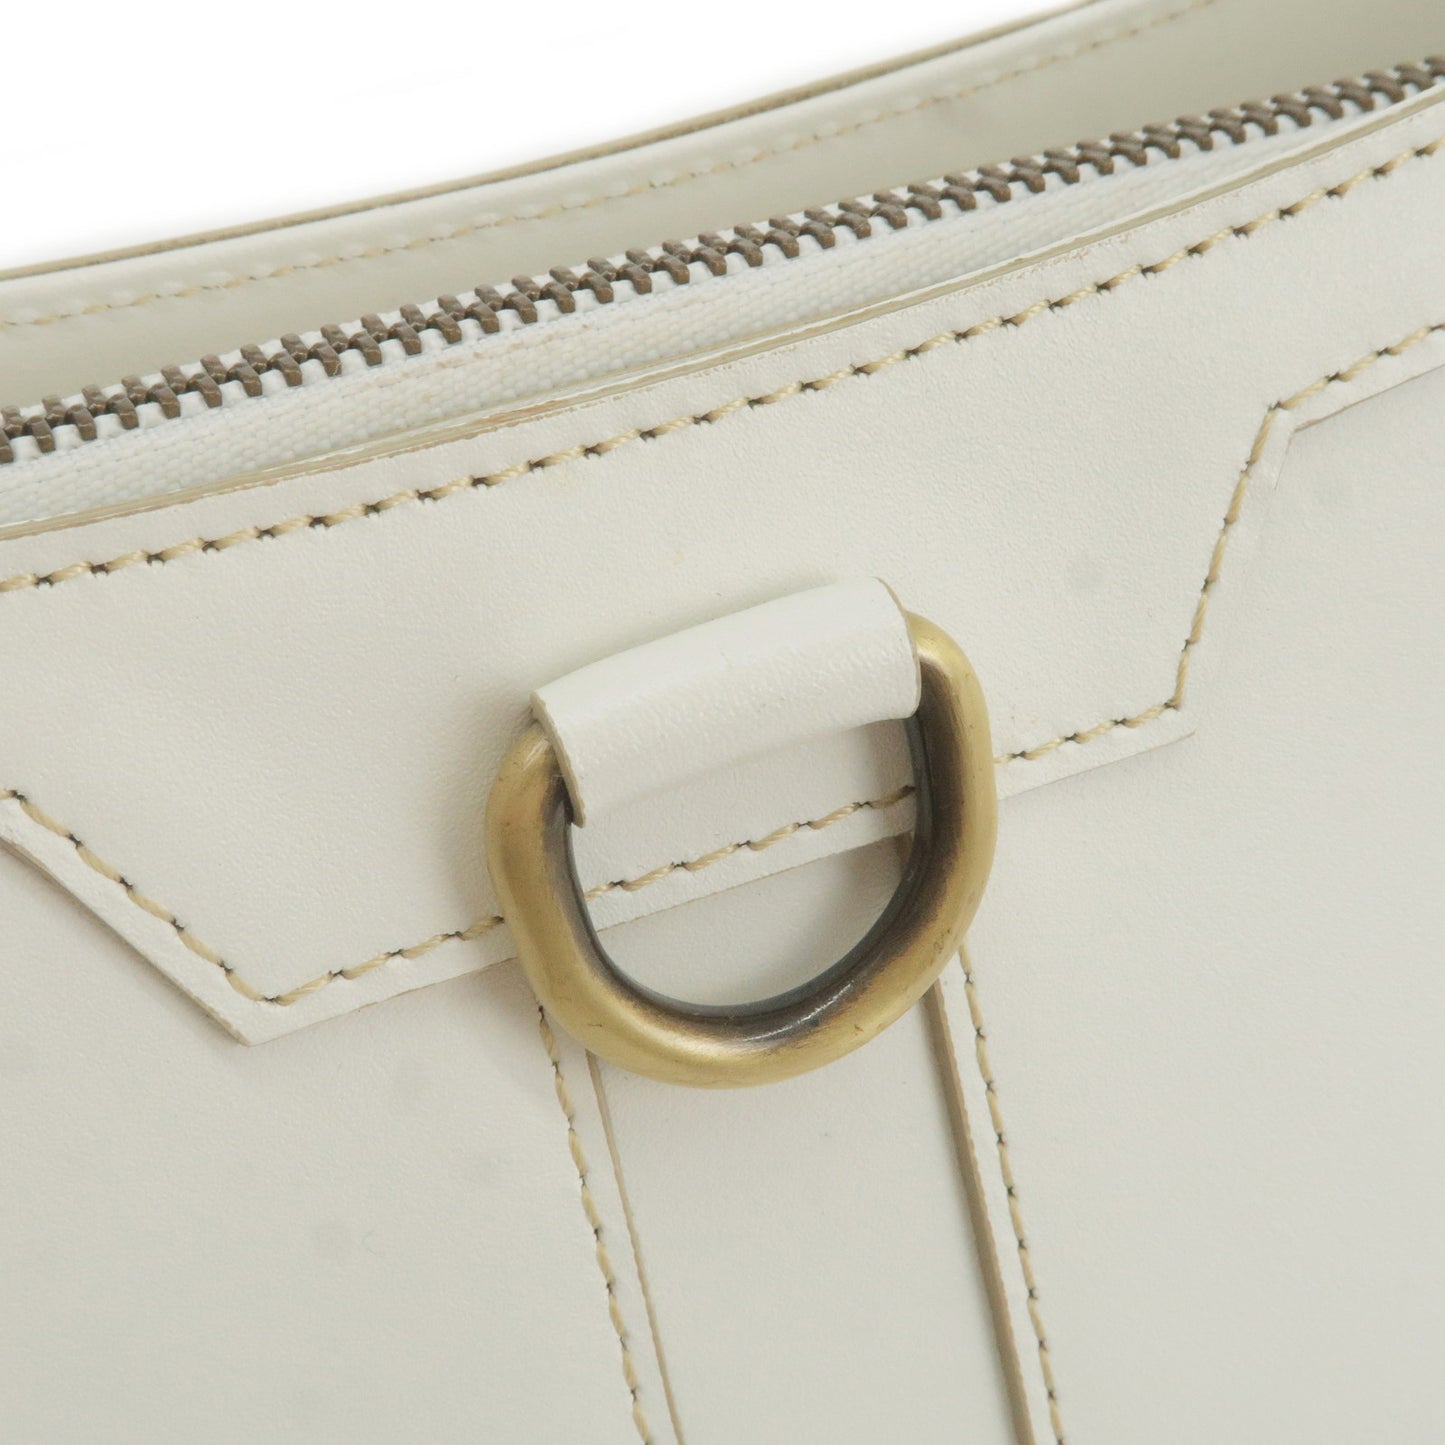 BURBERRY Leather Shoulder Bag Hand Bag Purse White